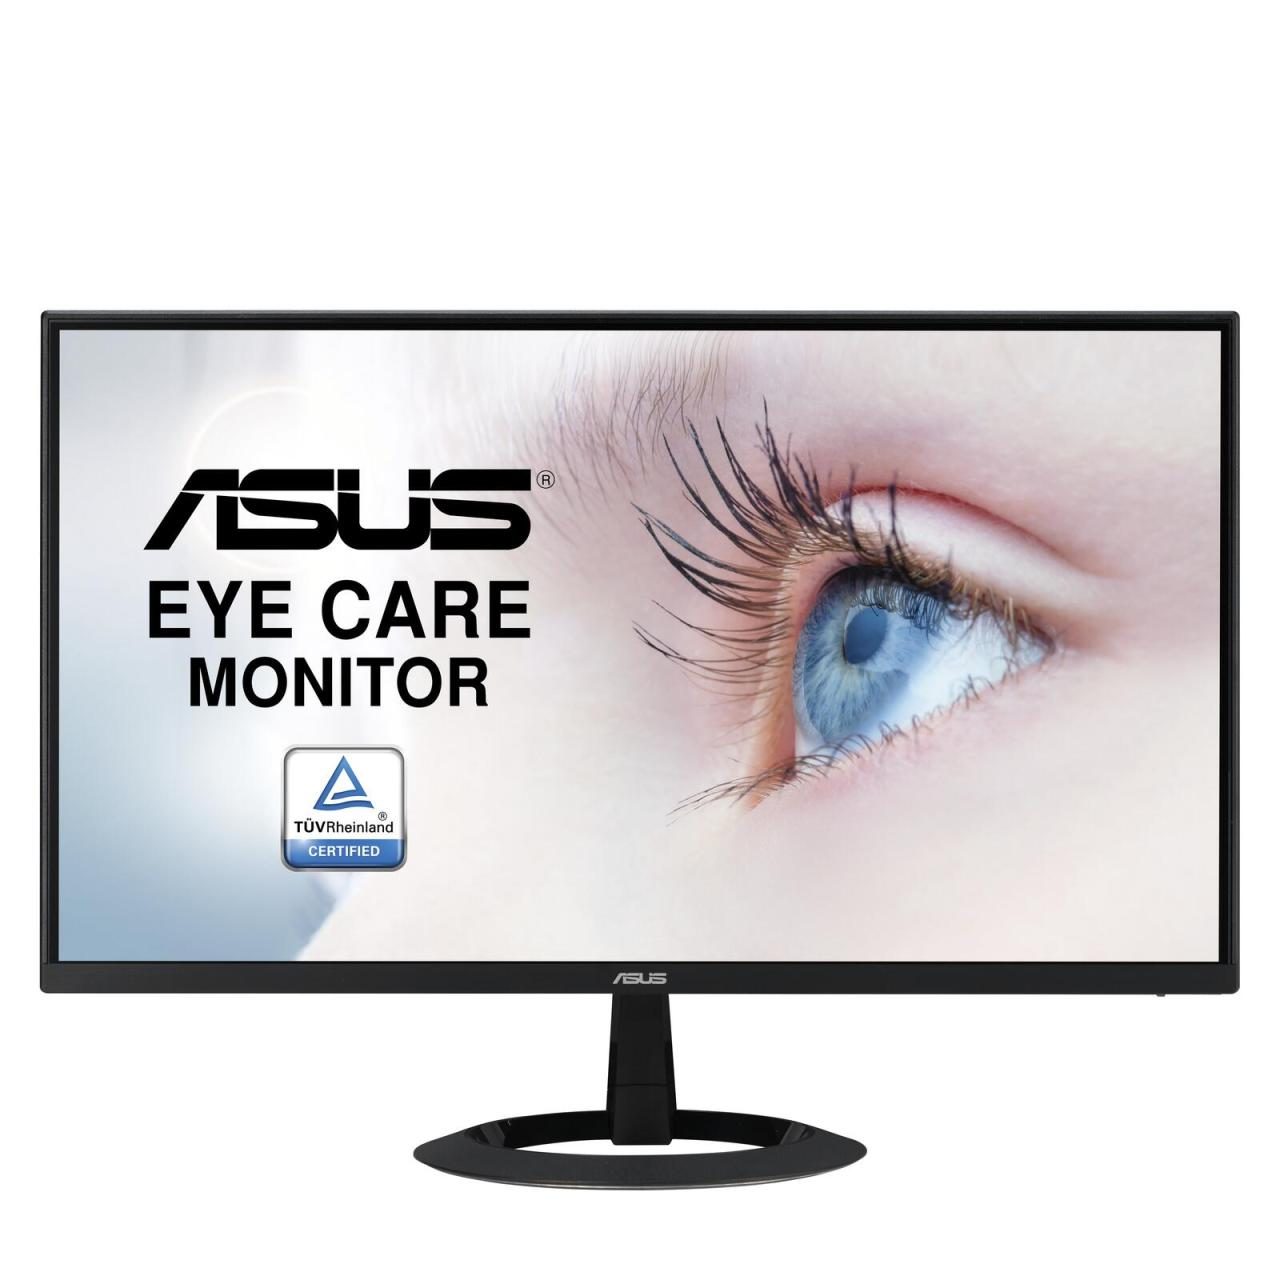 ASUS VZ22EHE Eye Care Monitor 54,5 cm (21,4 Zoll) von ASUS